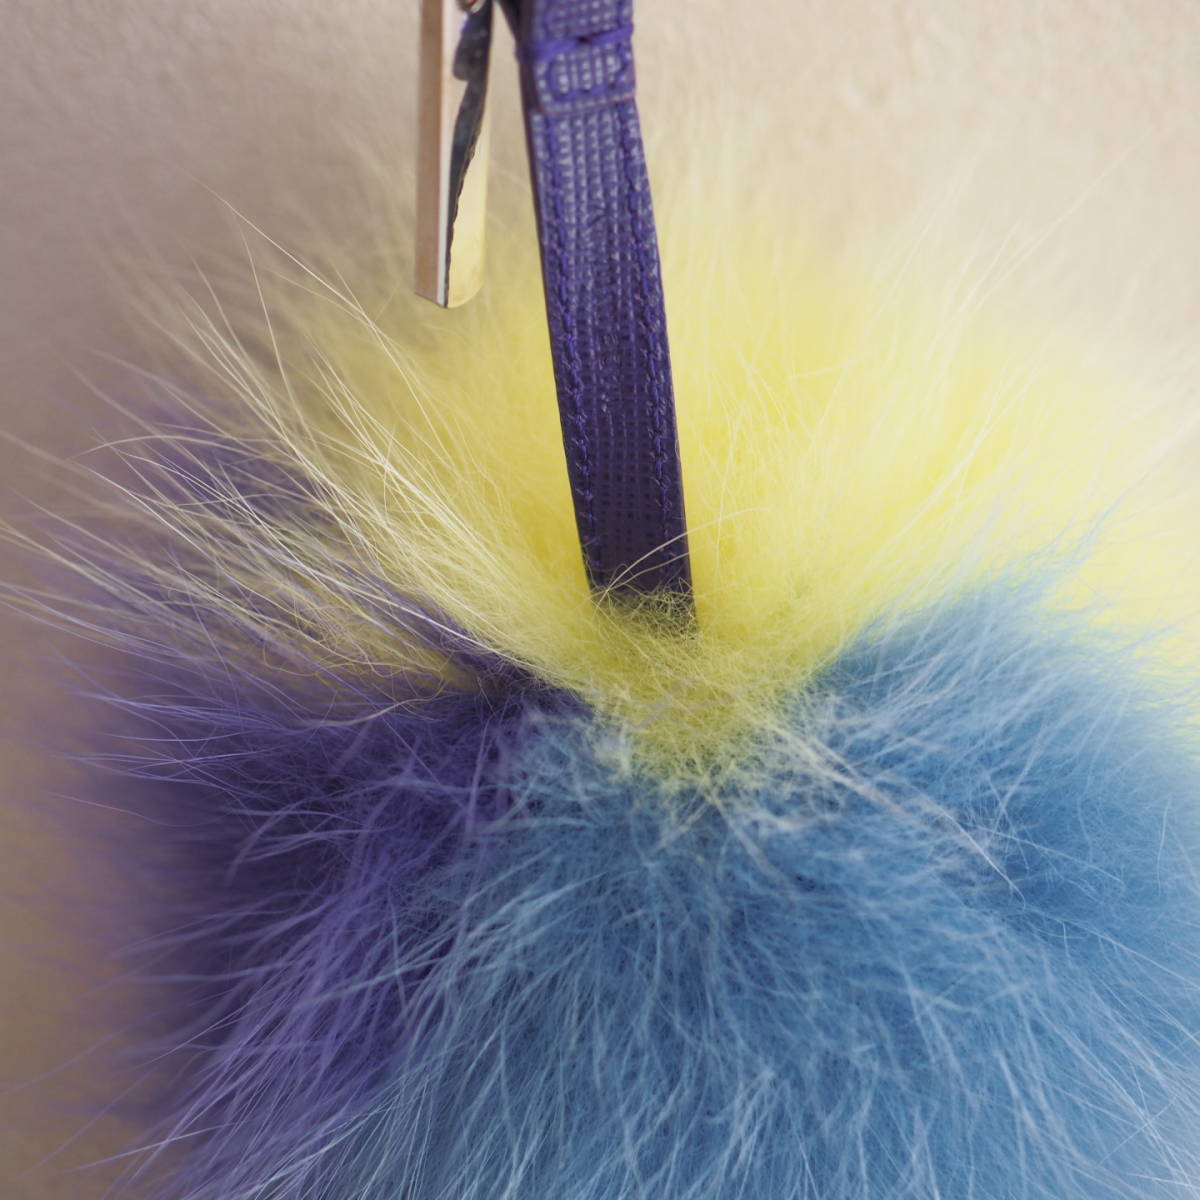  Fendi FENDIpompon charm key holder tricolor yellow blue purple fox fur real fur 7AR259 41C bonbon Monstar 